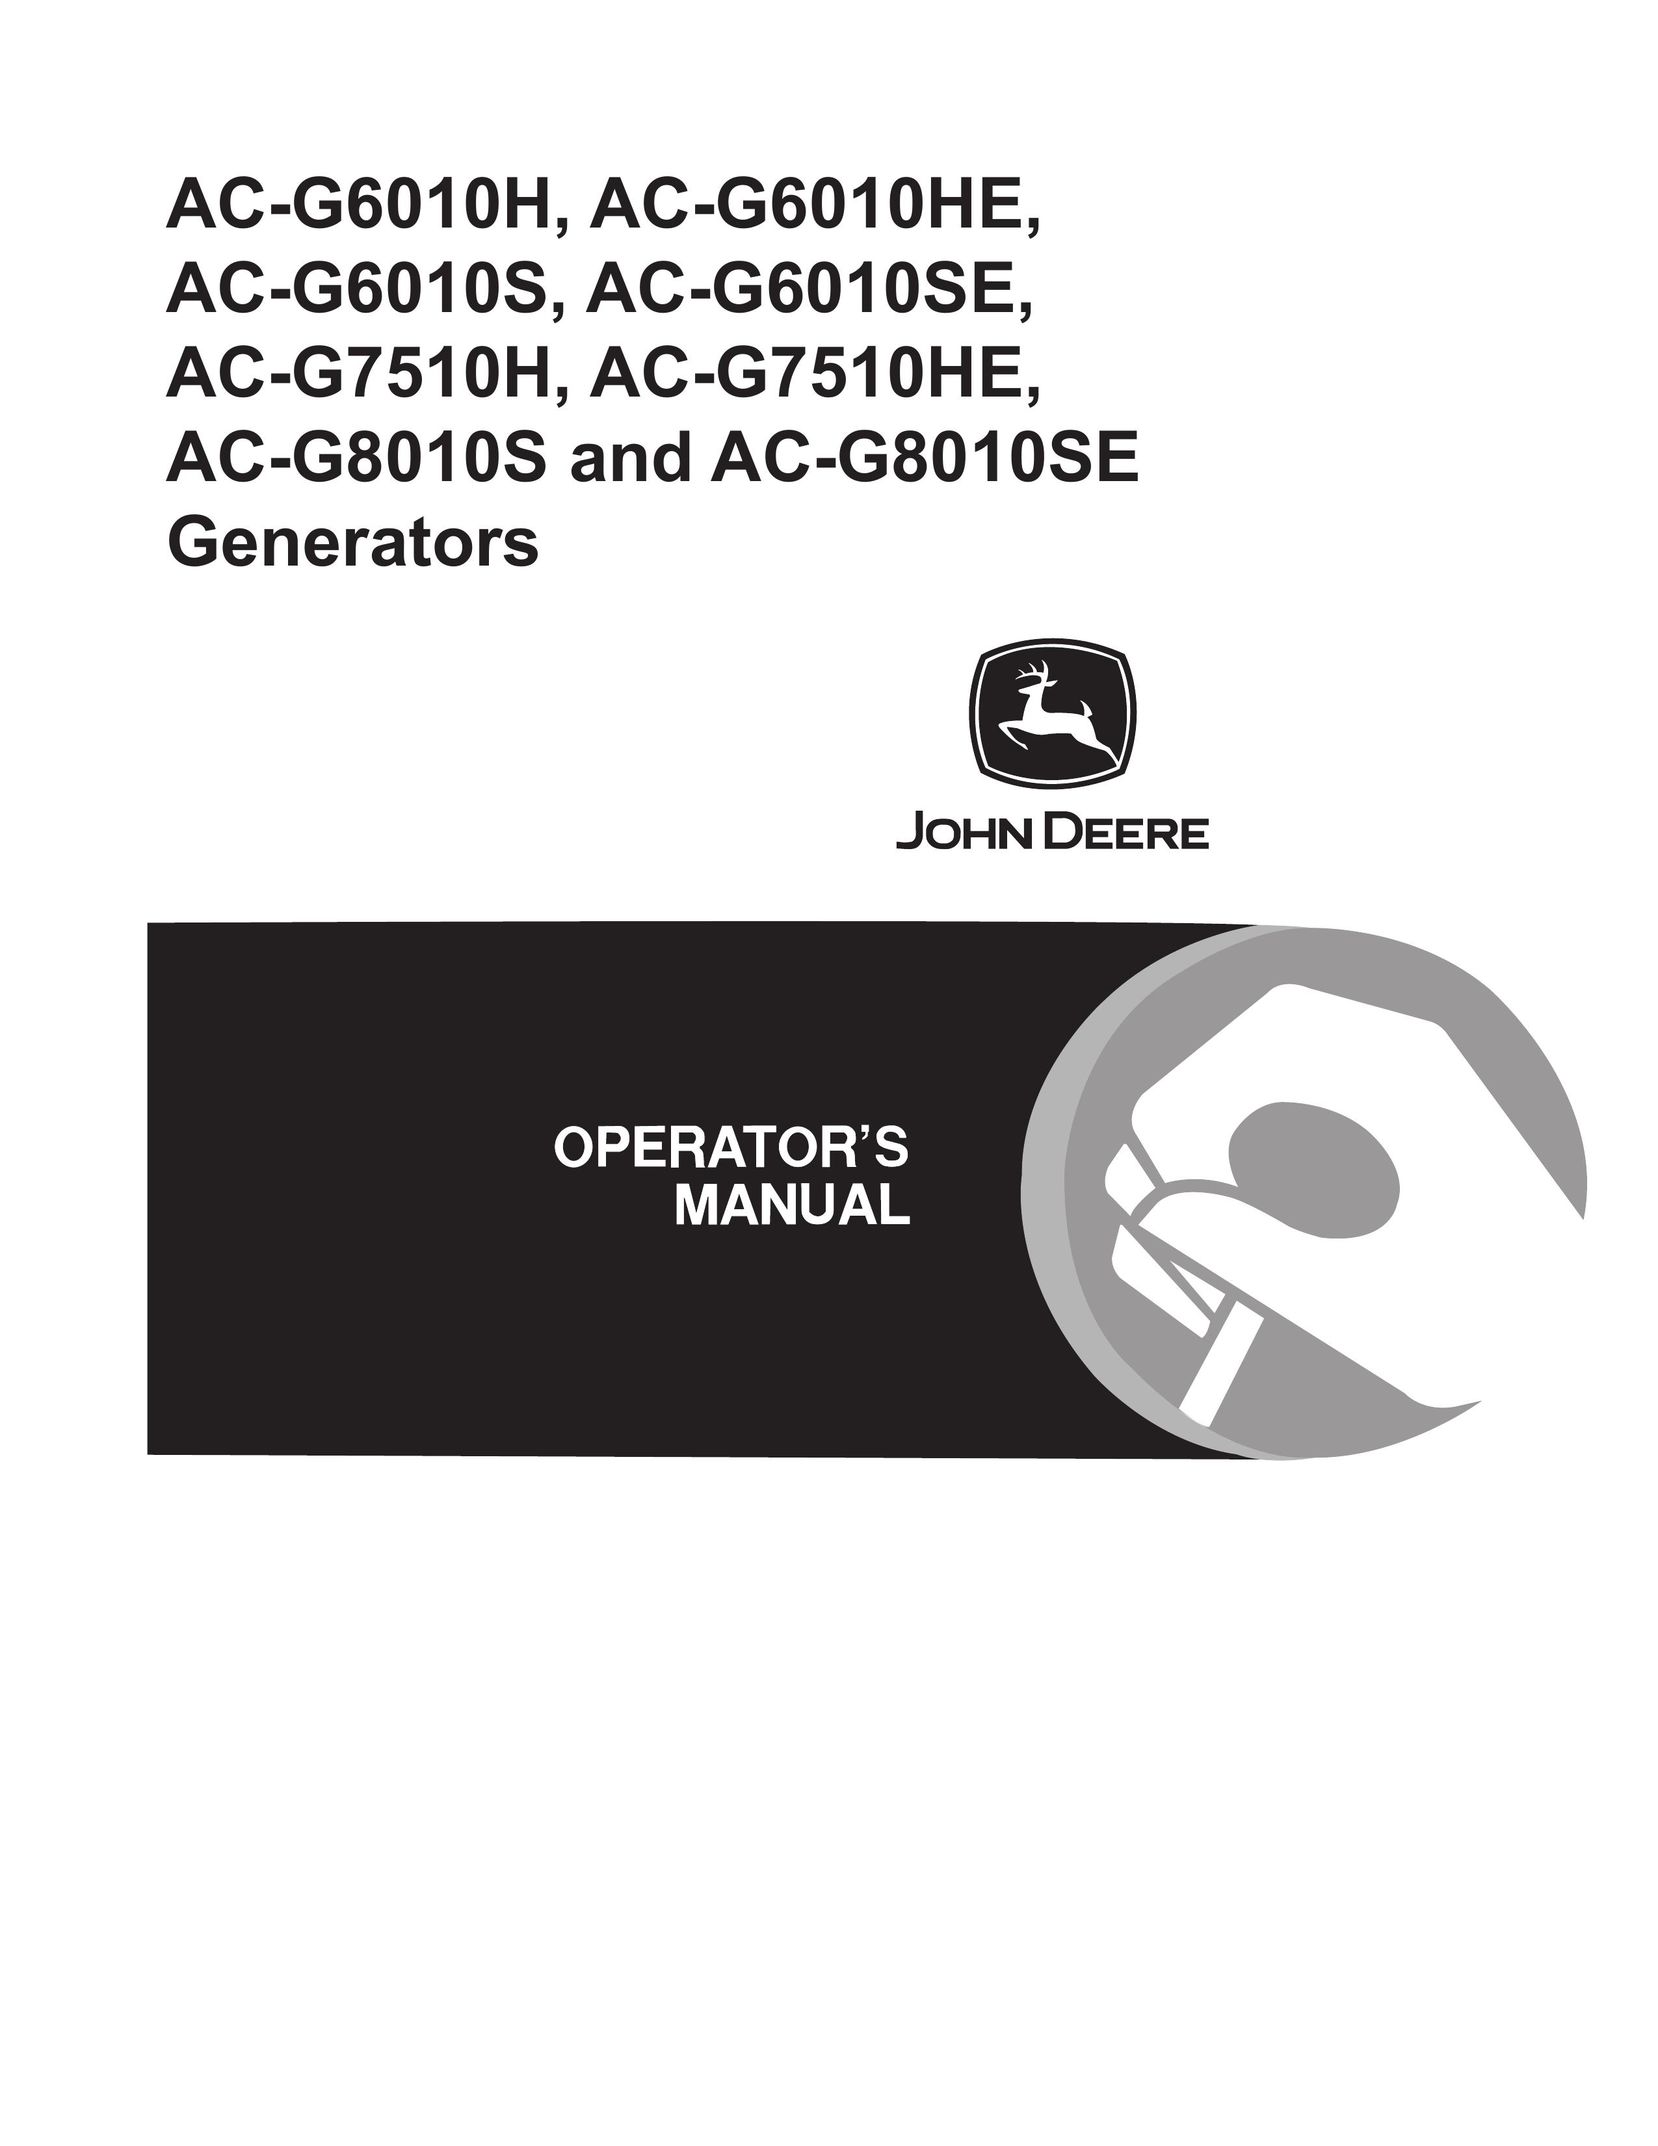 John Deere AC-G6010SE Welding System User Manual